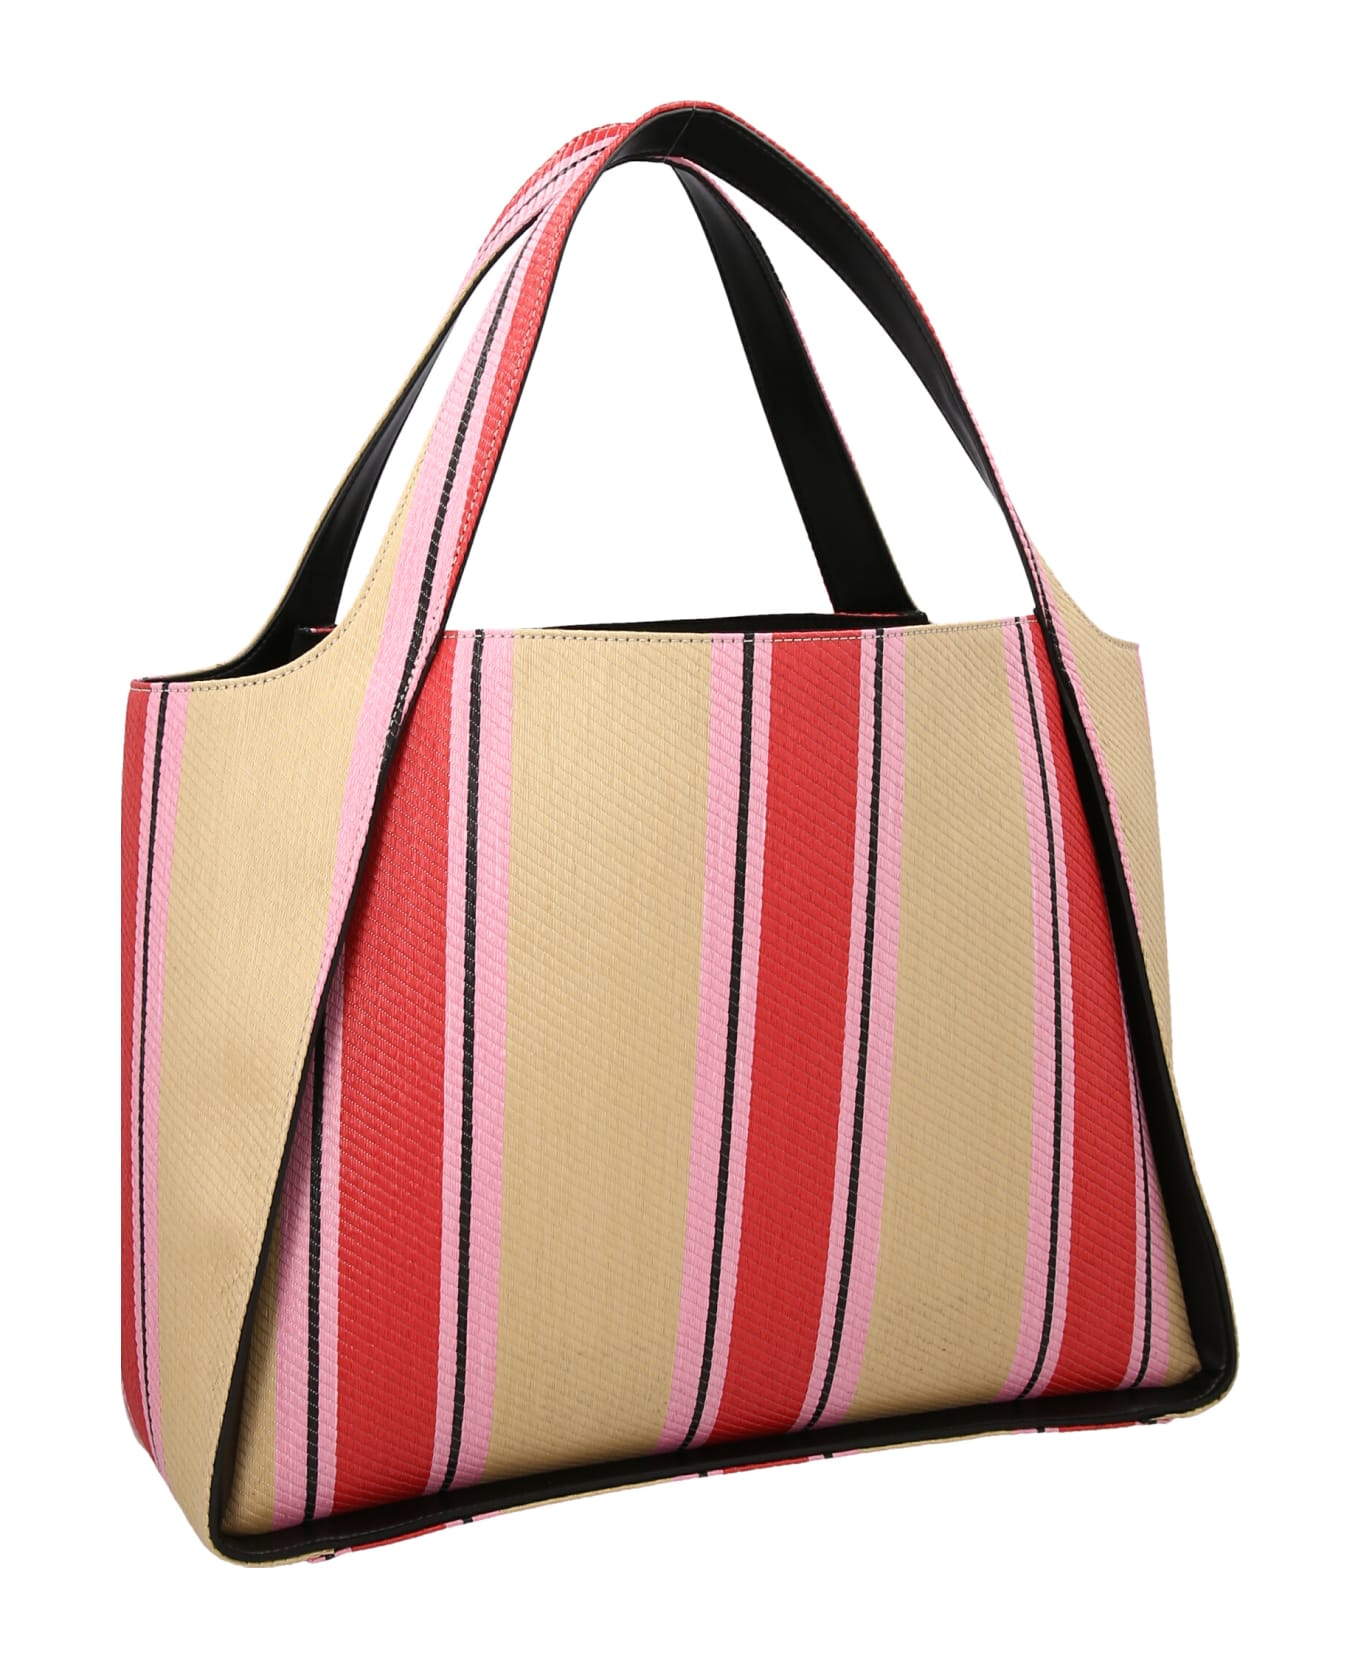 Stella McCartney Shopping Bag - Multicolor